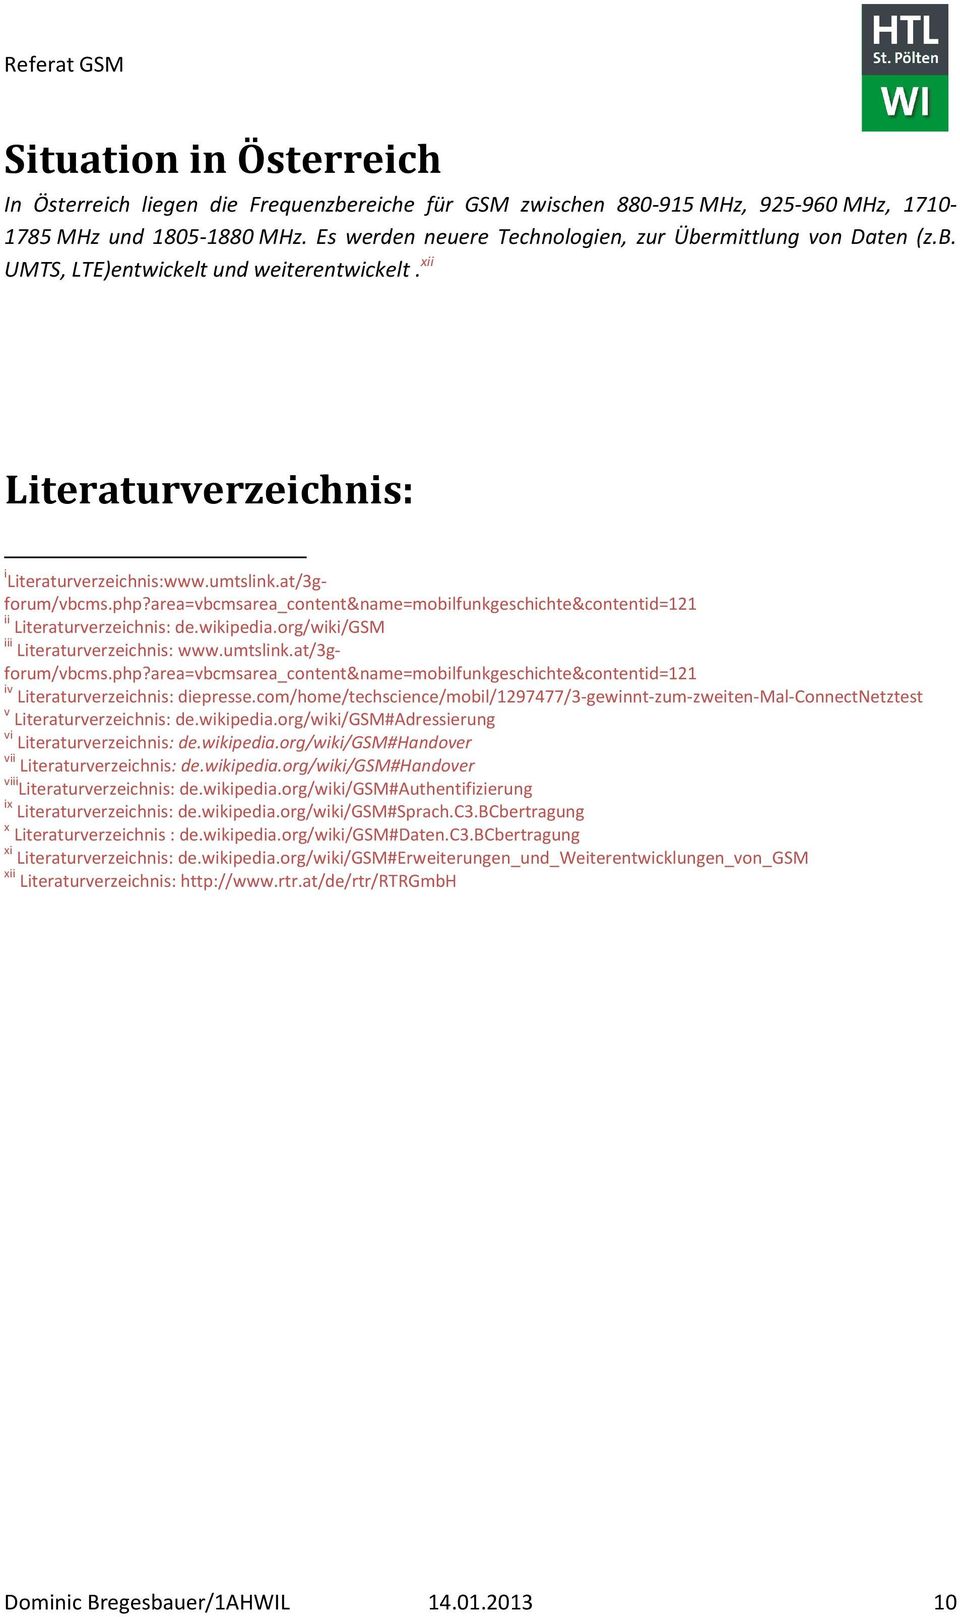 area=vbcmsarea_content&name=mobilfunkgeschichte&contentid=121 ii Literaturverzeichnis: de.wikipedia.org/wiki/gsm iii Literaturverzeichnis: www.umtslink.at/3gforum/vbcms.php?